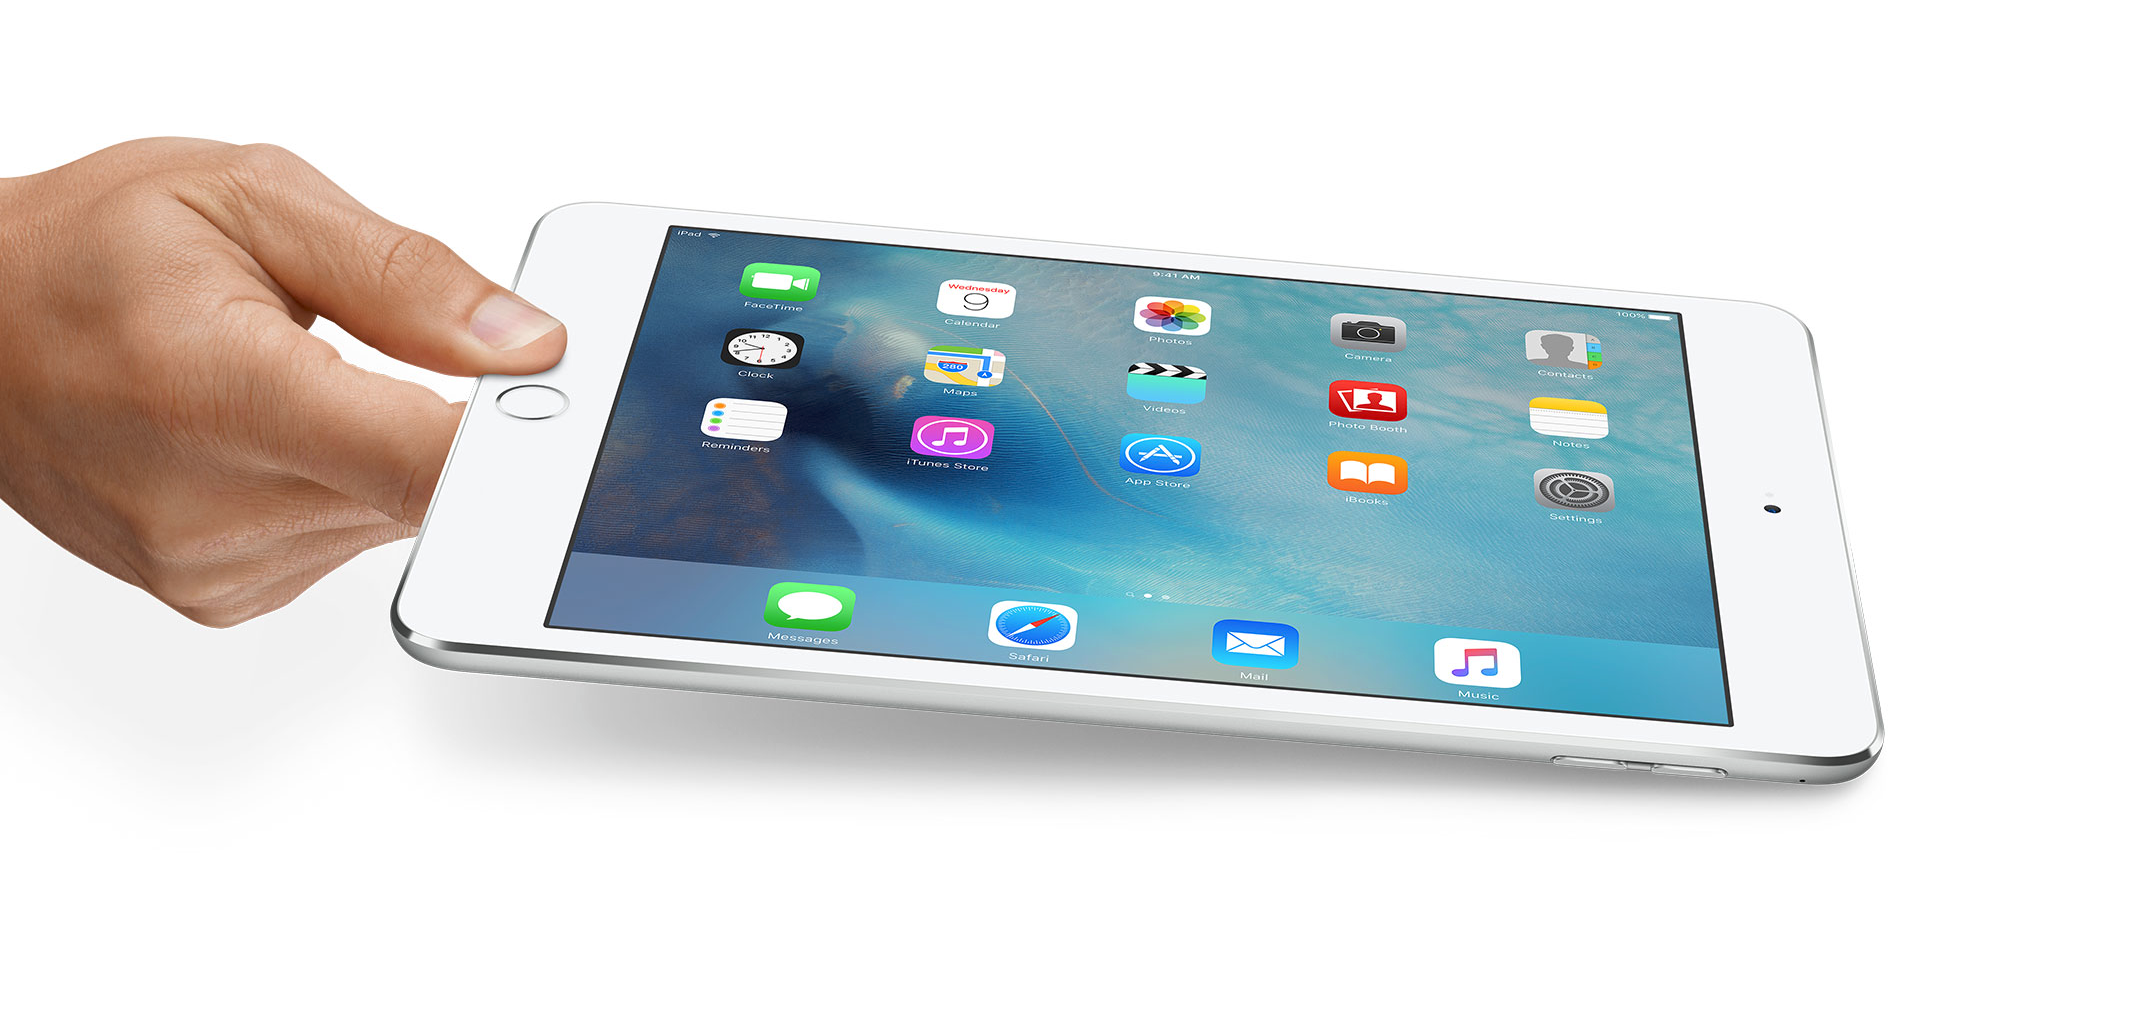 iPad Mini 4 เปิดตัวแบบเงียบมาก สเปคเท่า iPhone 6 ในราคาเท่า iPad Mini 3